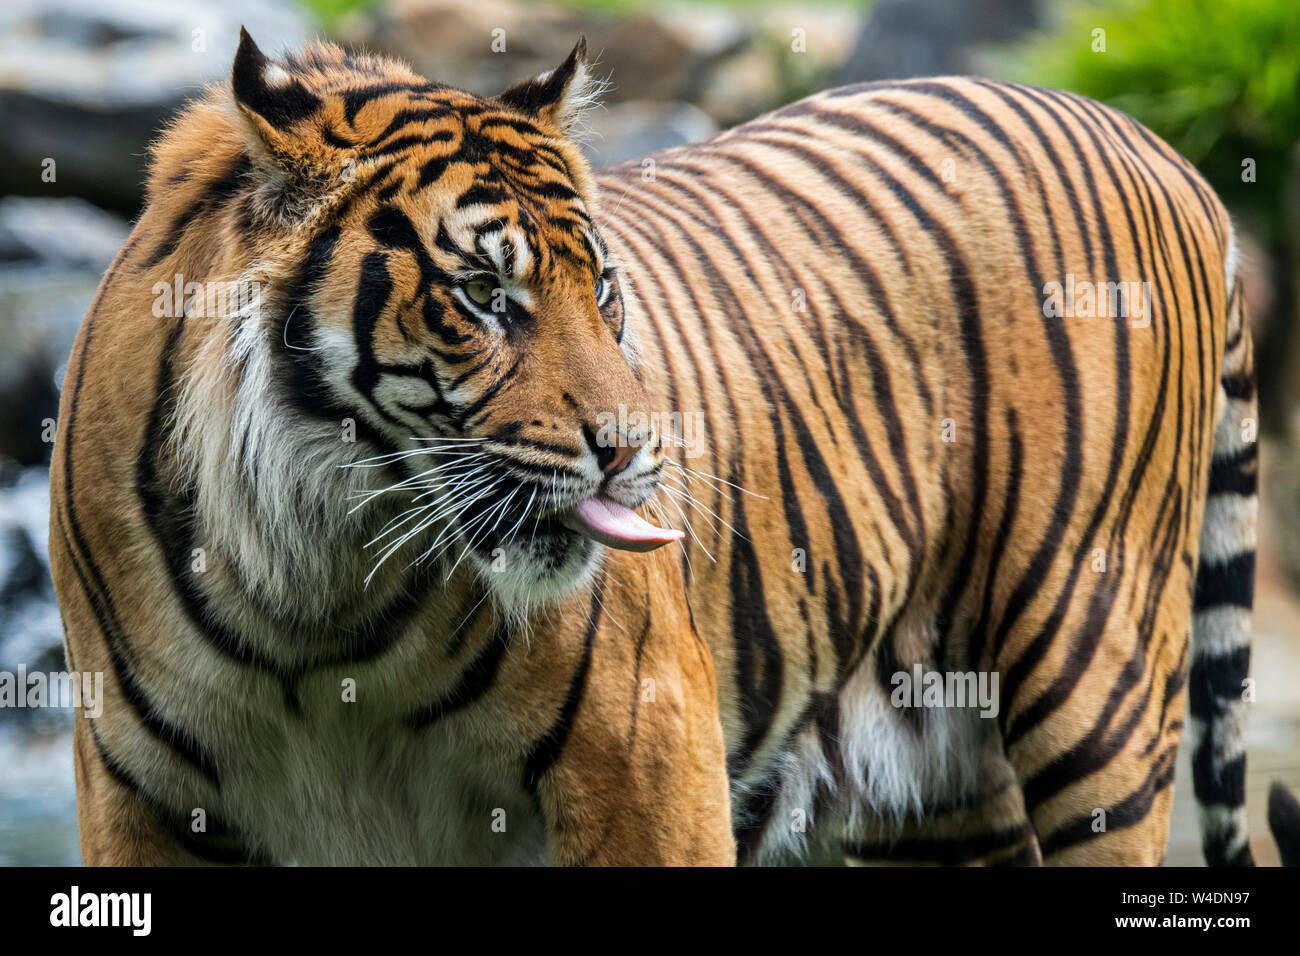 Sumatran tiger (Panthera tigris sondaica) sticking tongue out, native to the Indonesian island of Sumatra, Indonesia Stock Photo